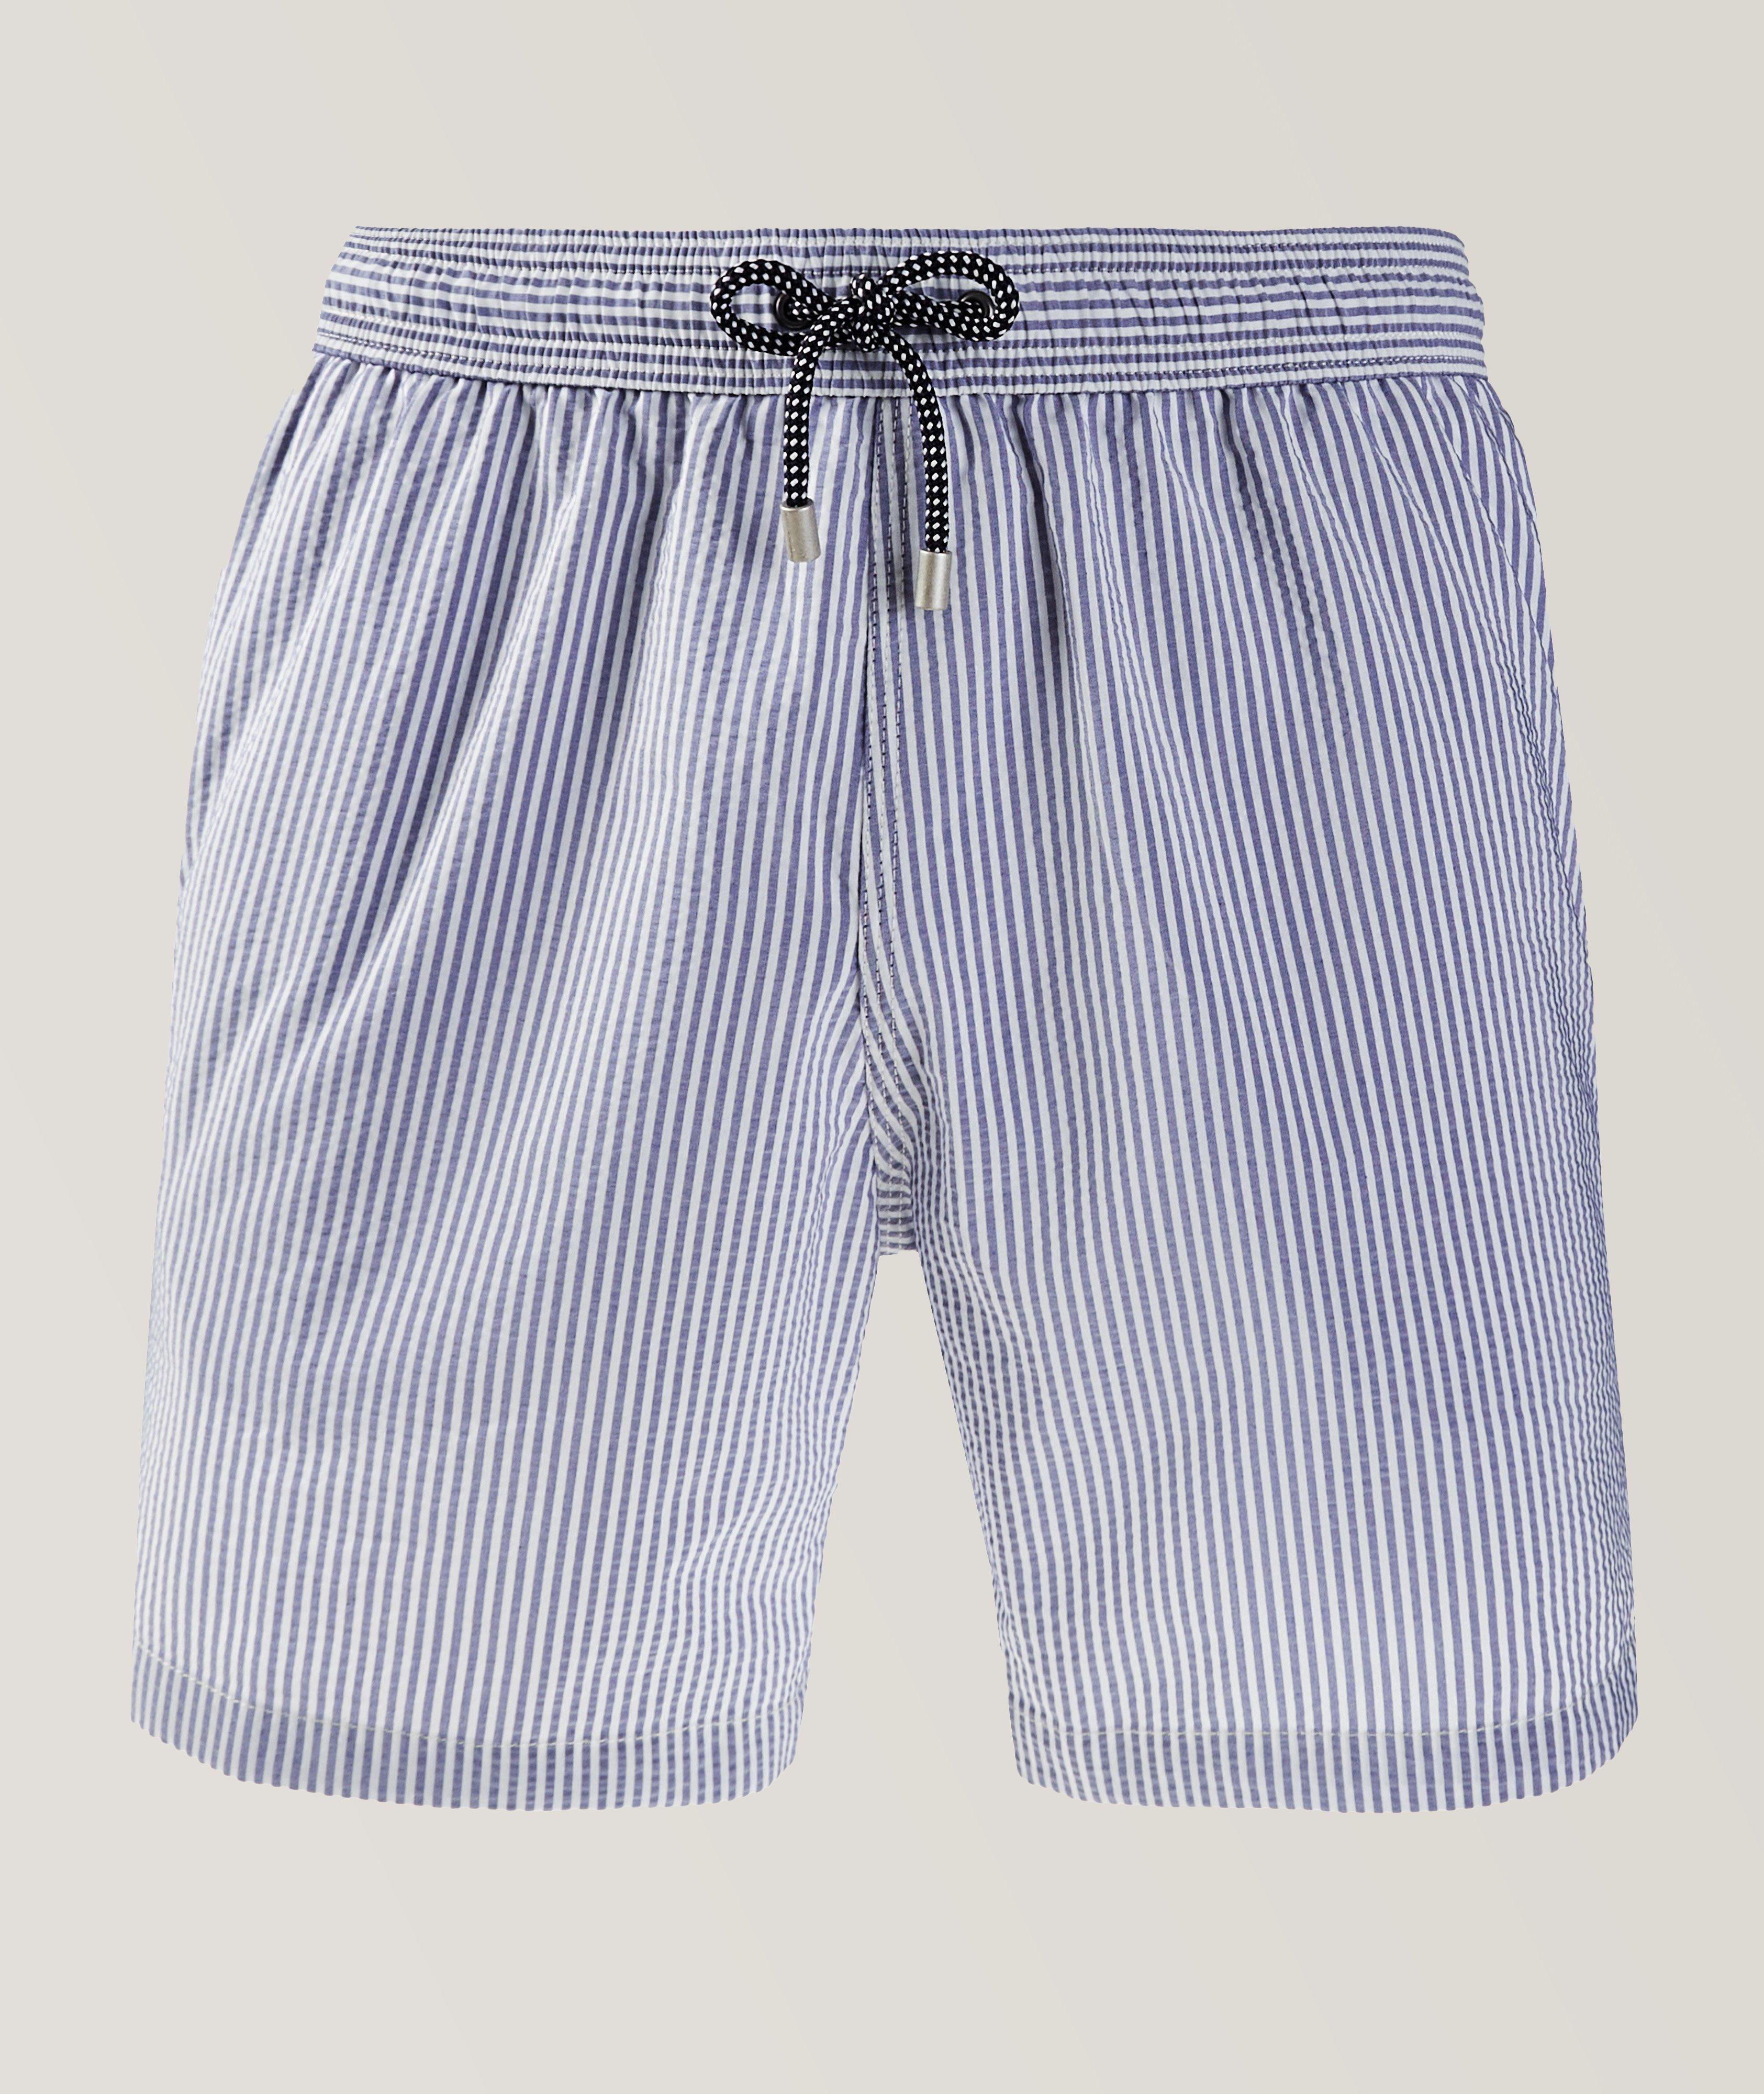 Striped Swim Shorts image 0